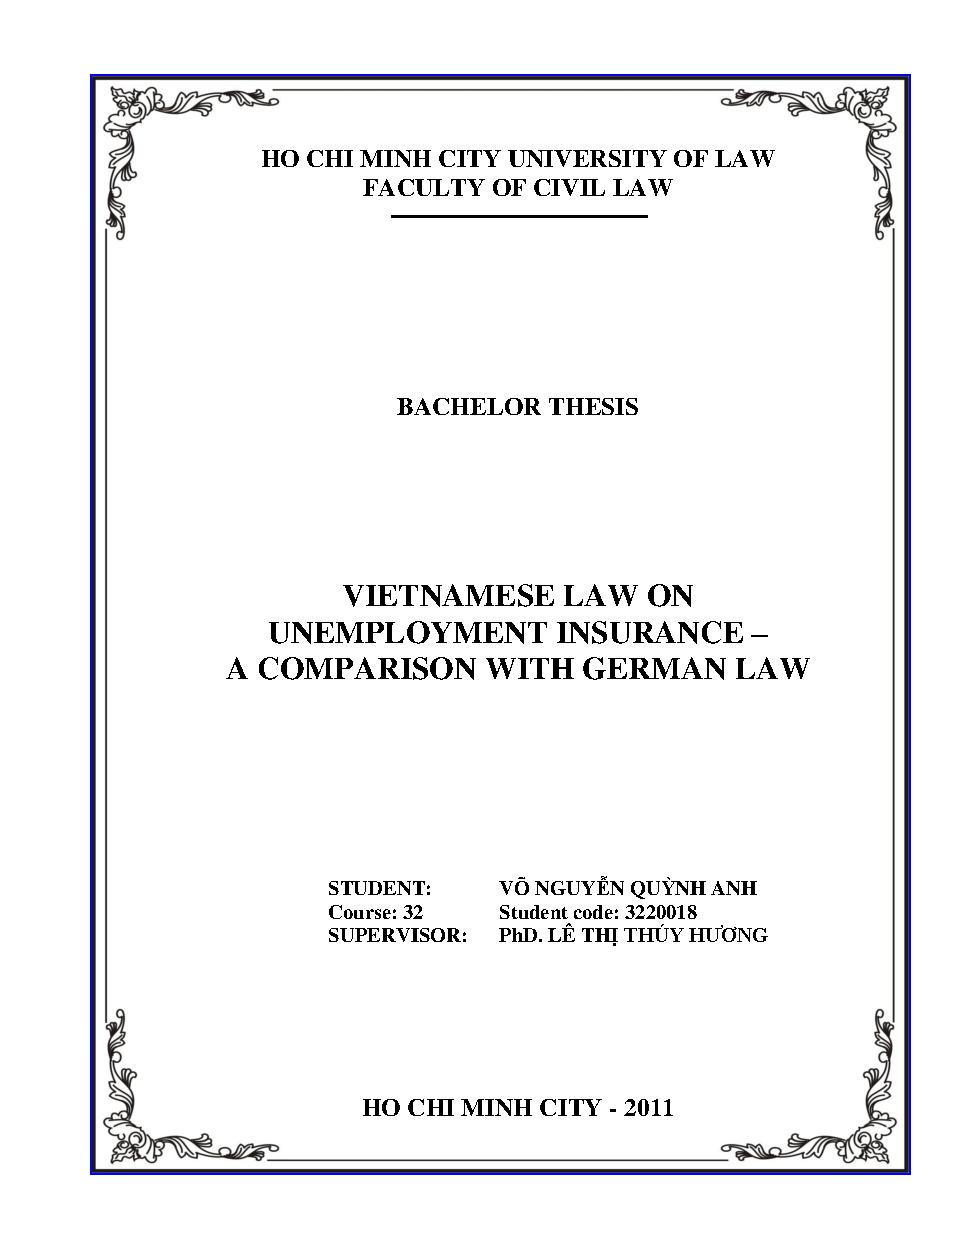 Vietnamese law on unemployment insurance - A comparison with German law